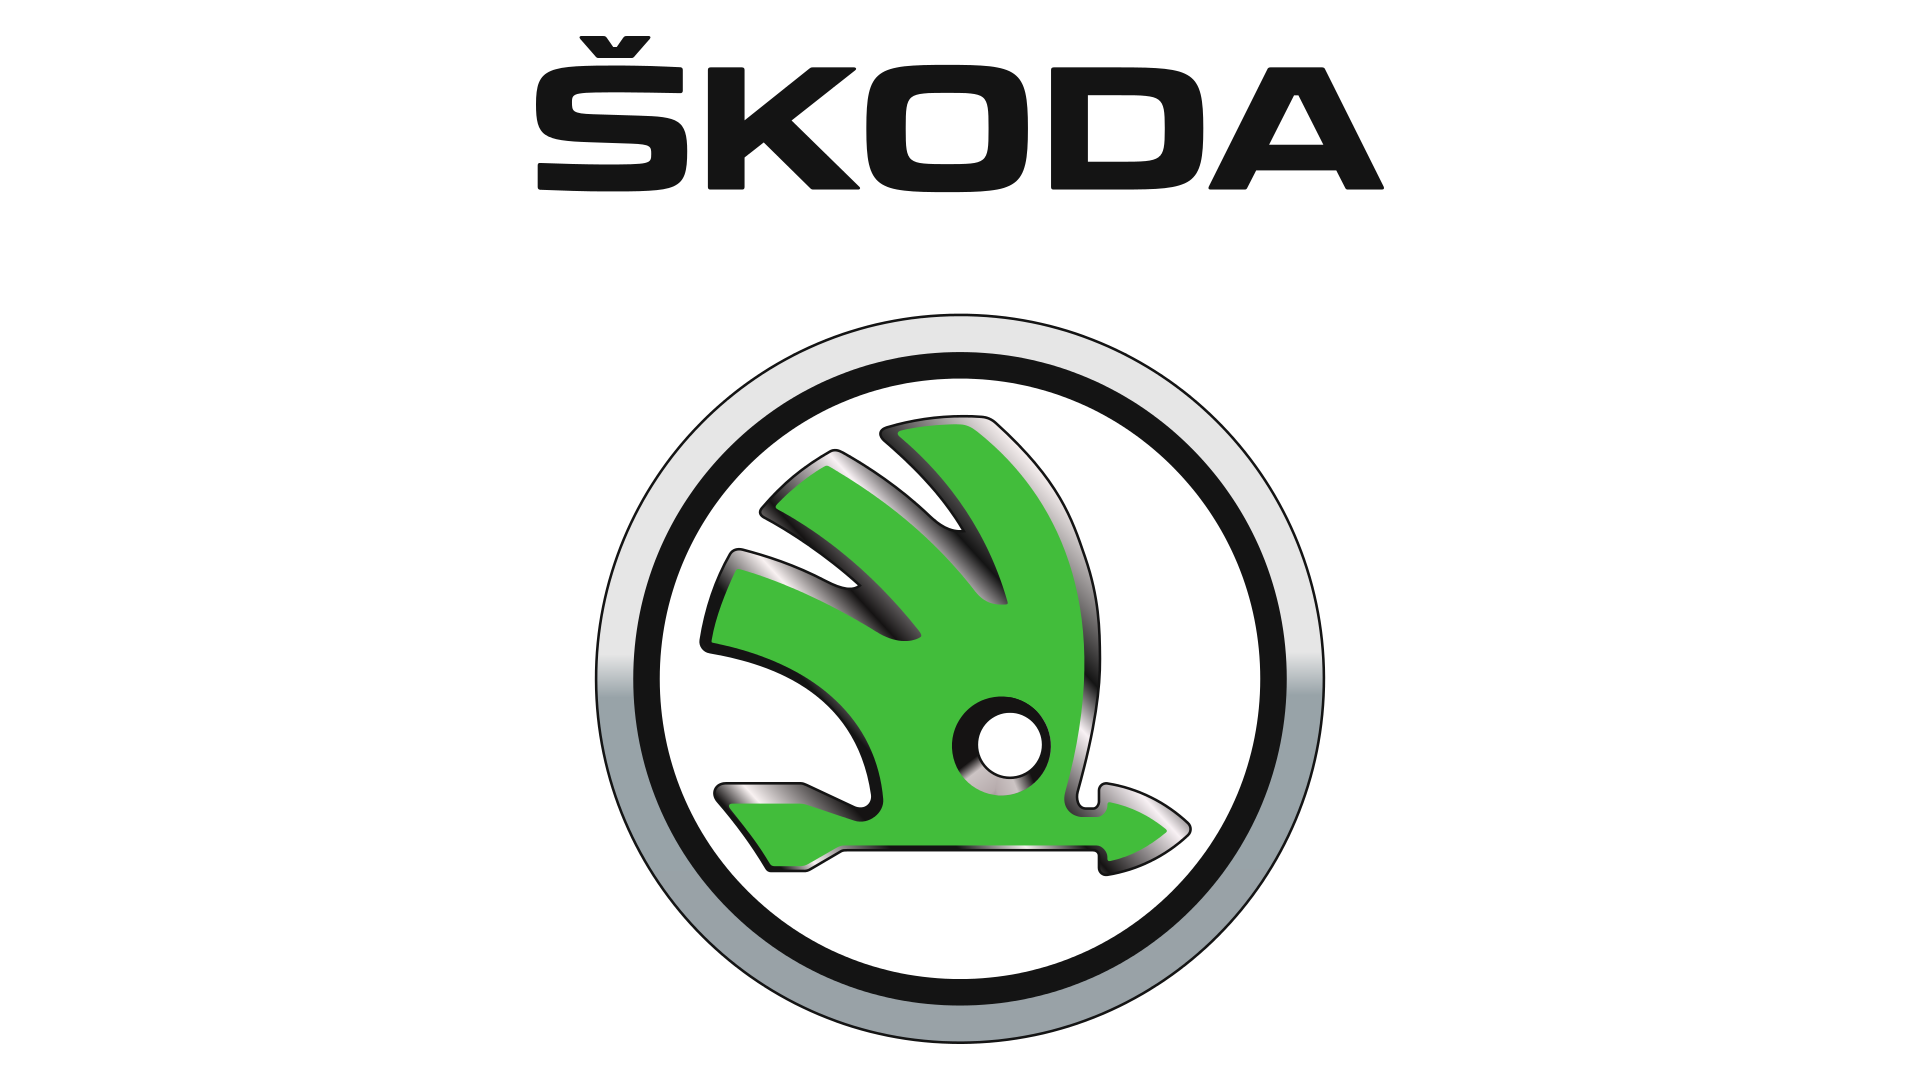 Skoda HD PNG - 117550